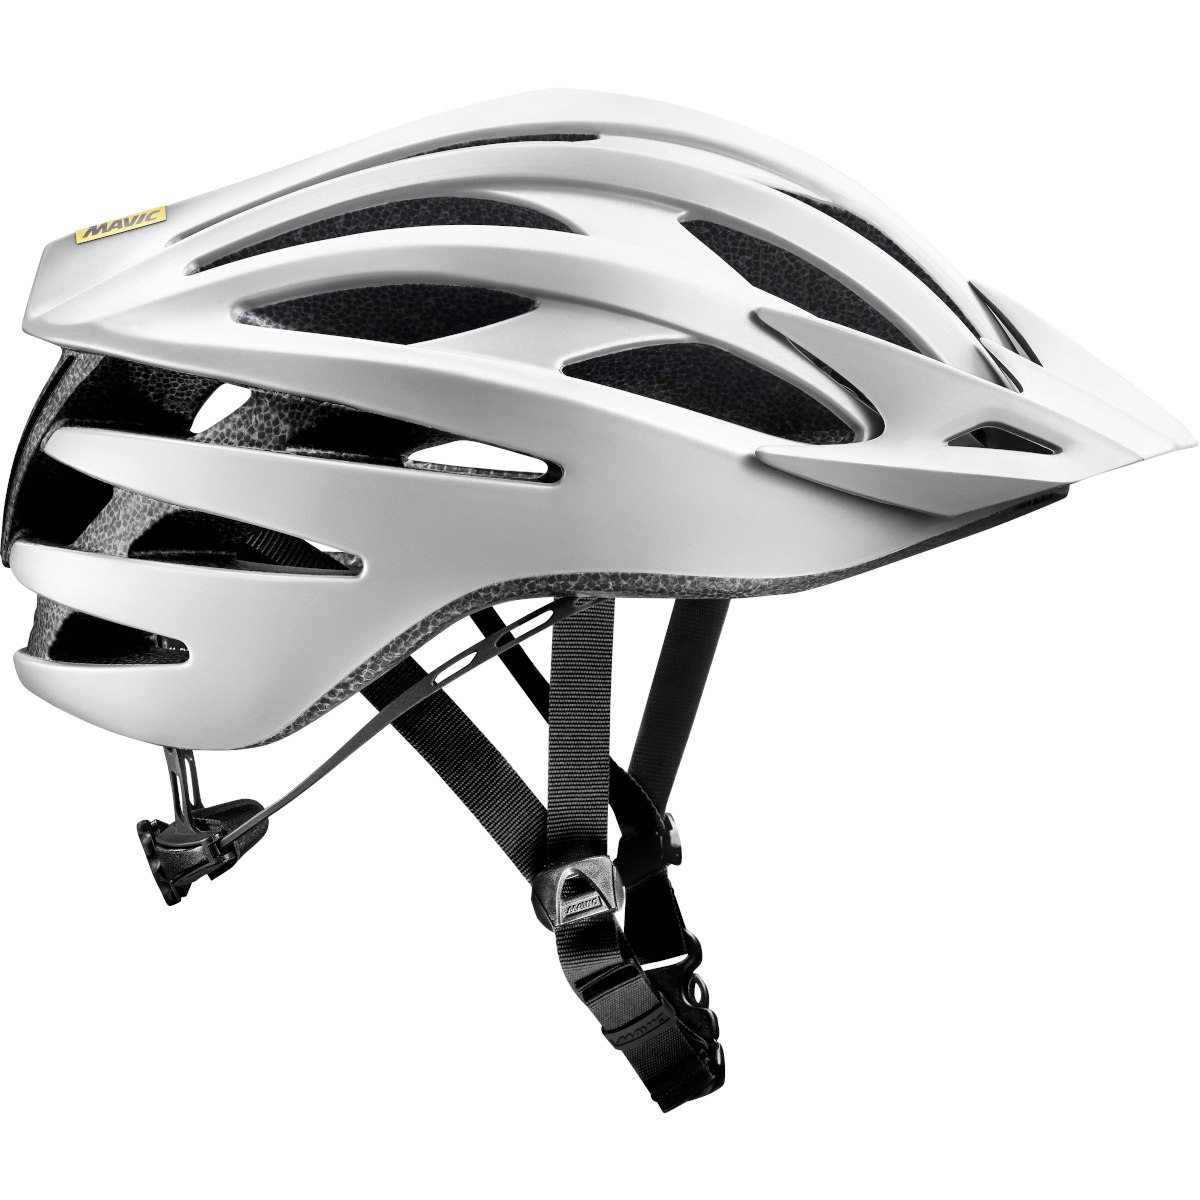 Produktbild von Mavic Crossride SL Elite Helm - white/black